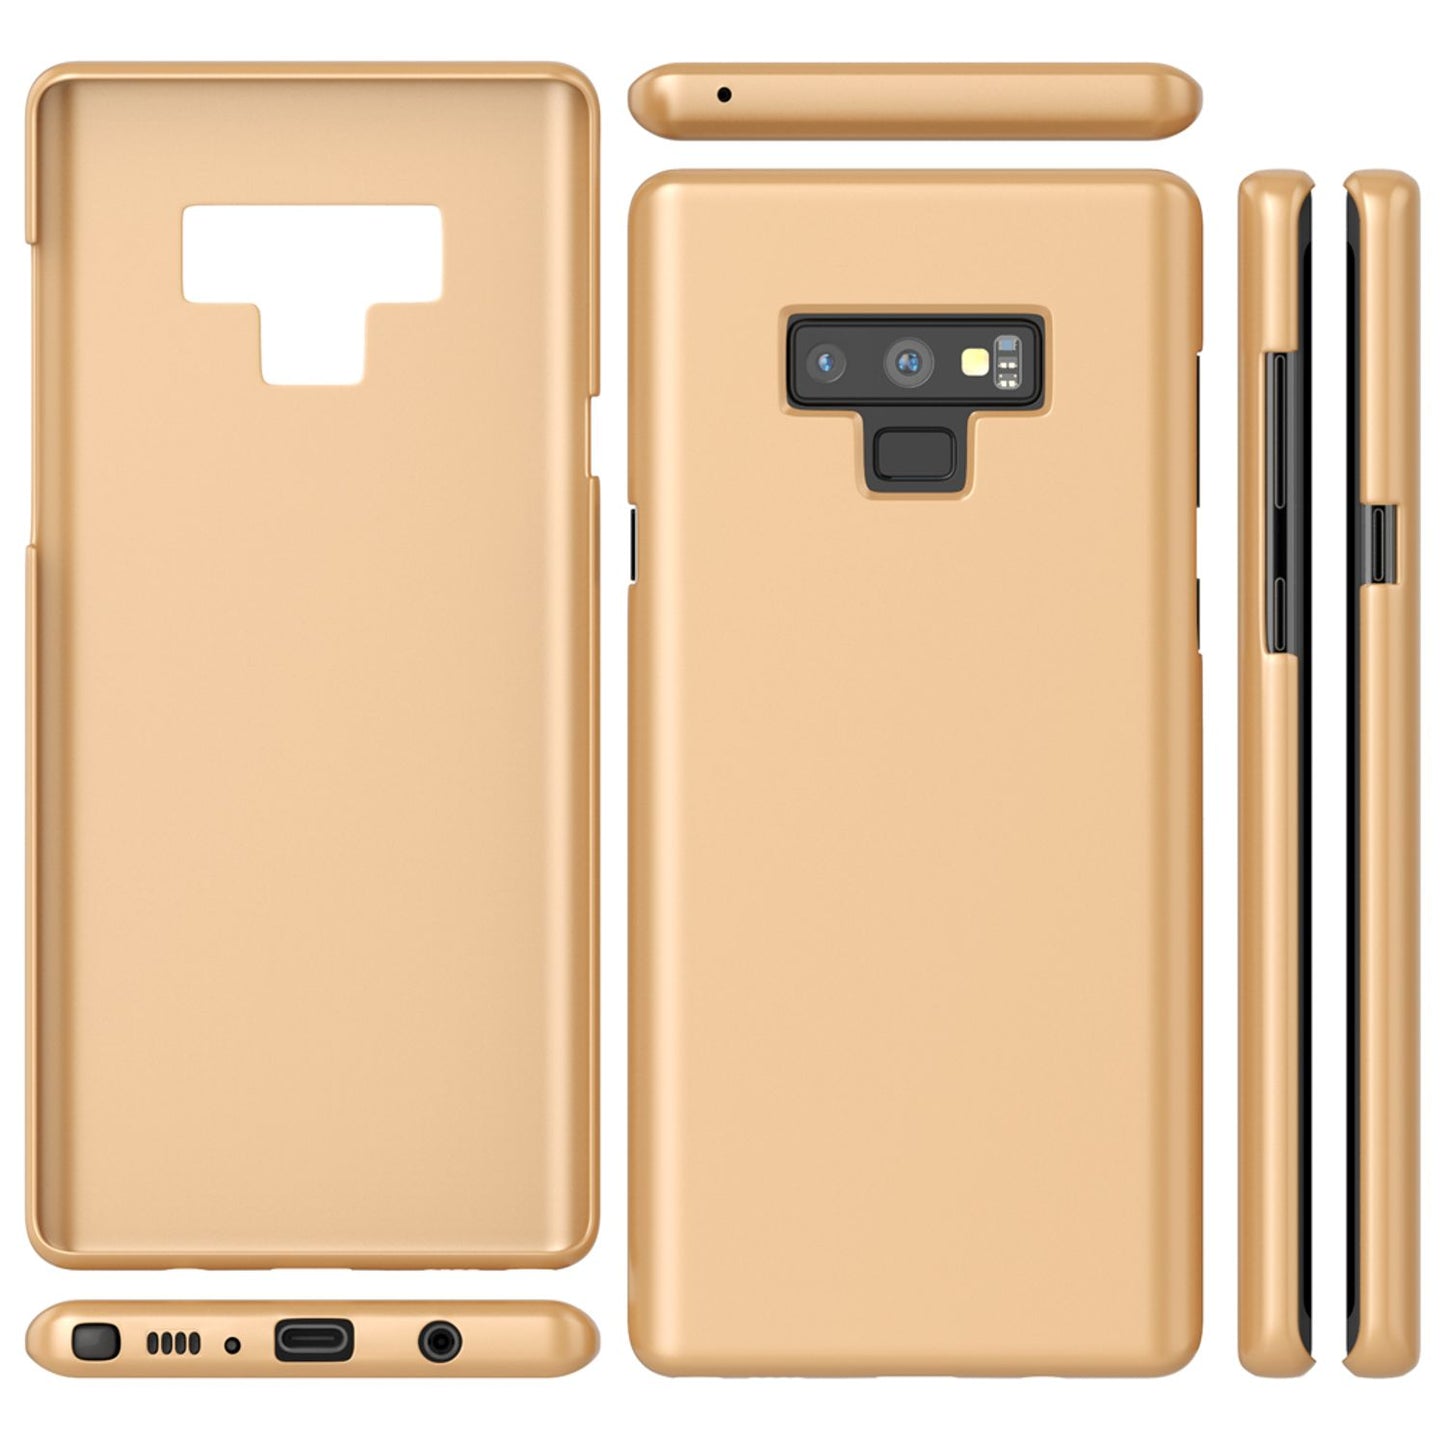 NALIA Handy Hülle für Samsung Galaxy Note 9, Dünn Hard Case Cover Schutzhülle